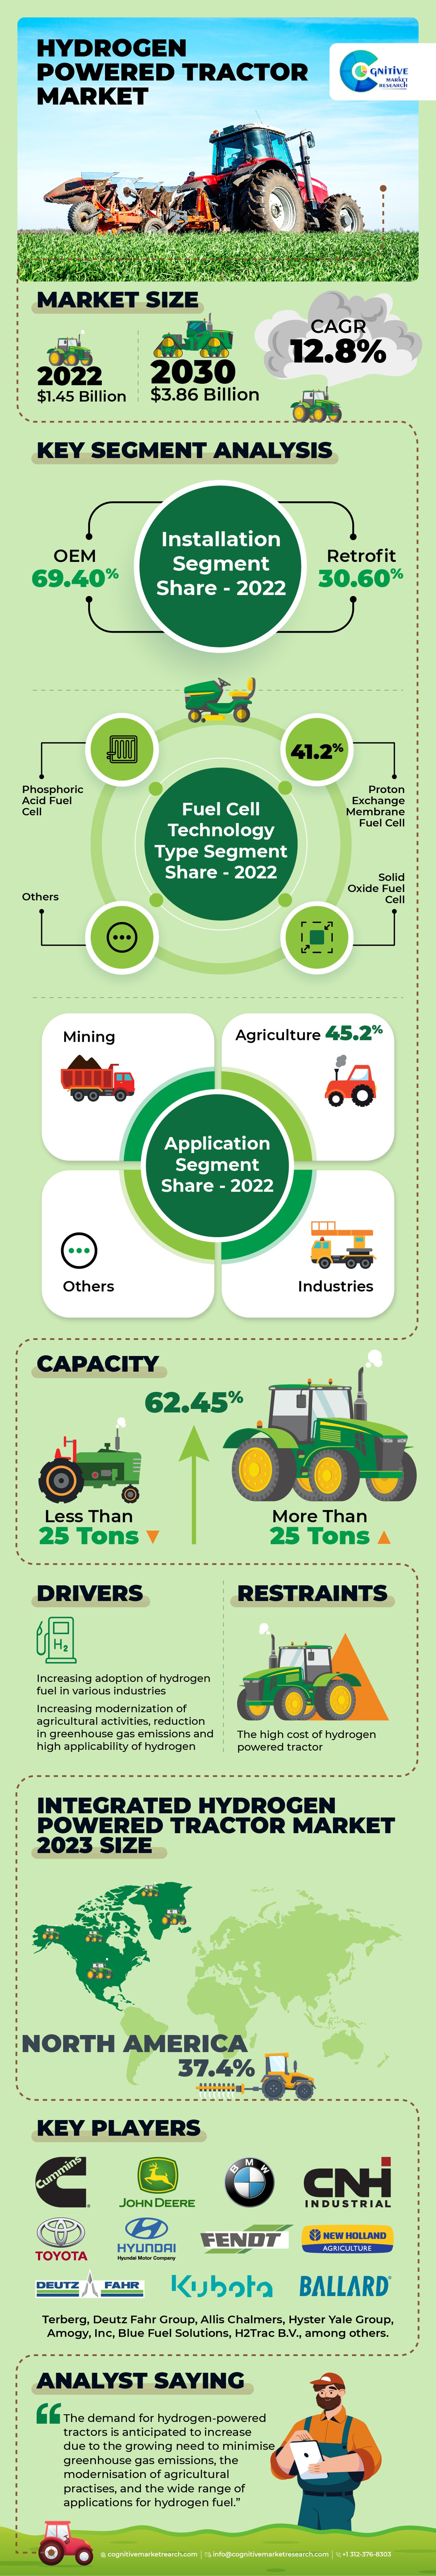 Hydrogen Powered Tractor Market Size to Reach $3.28 billion by 2030!